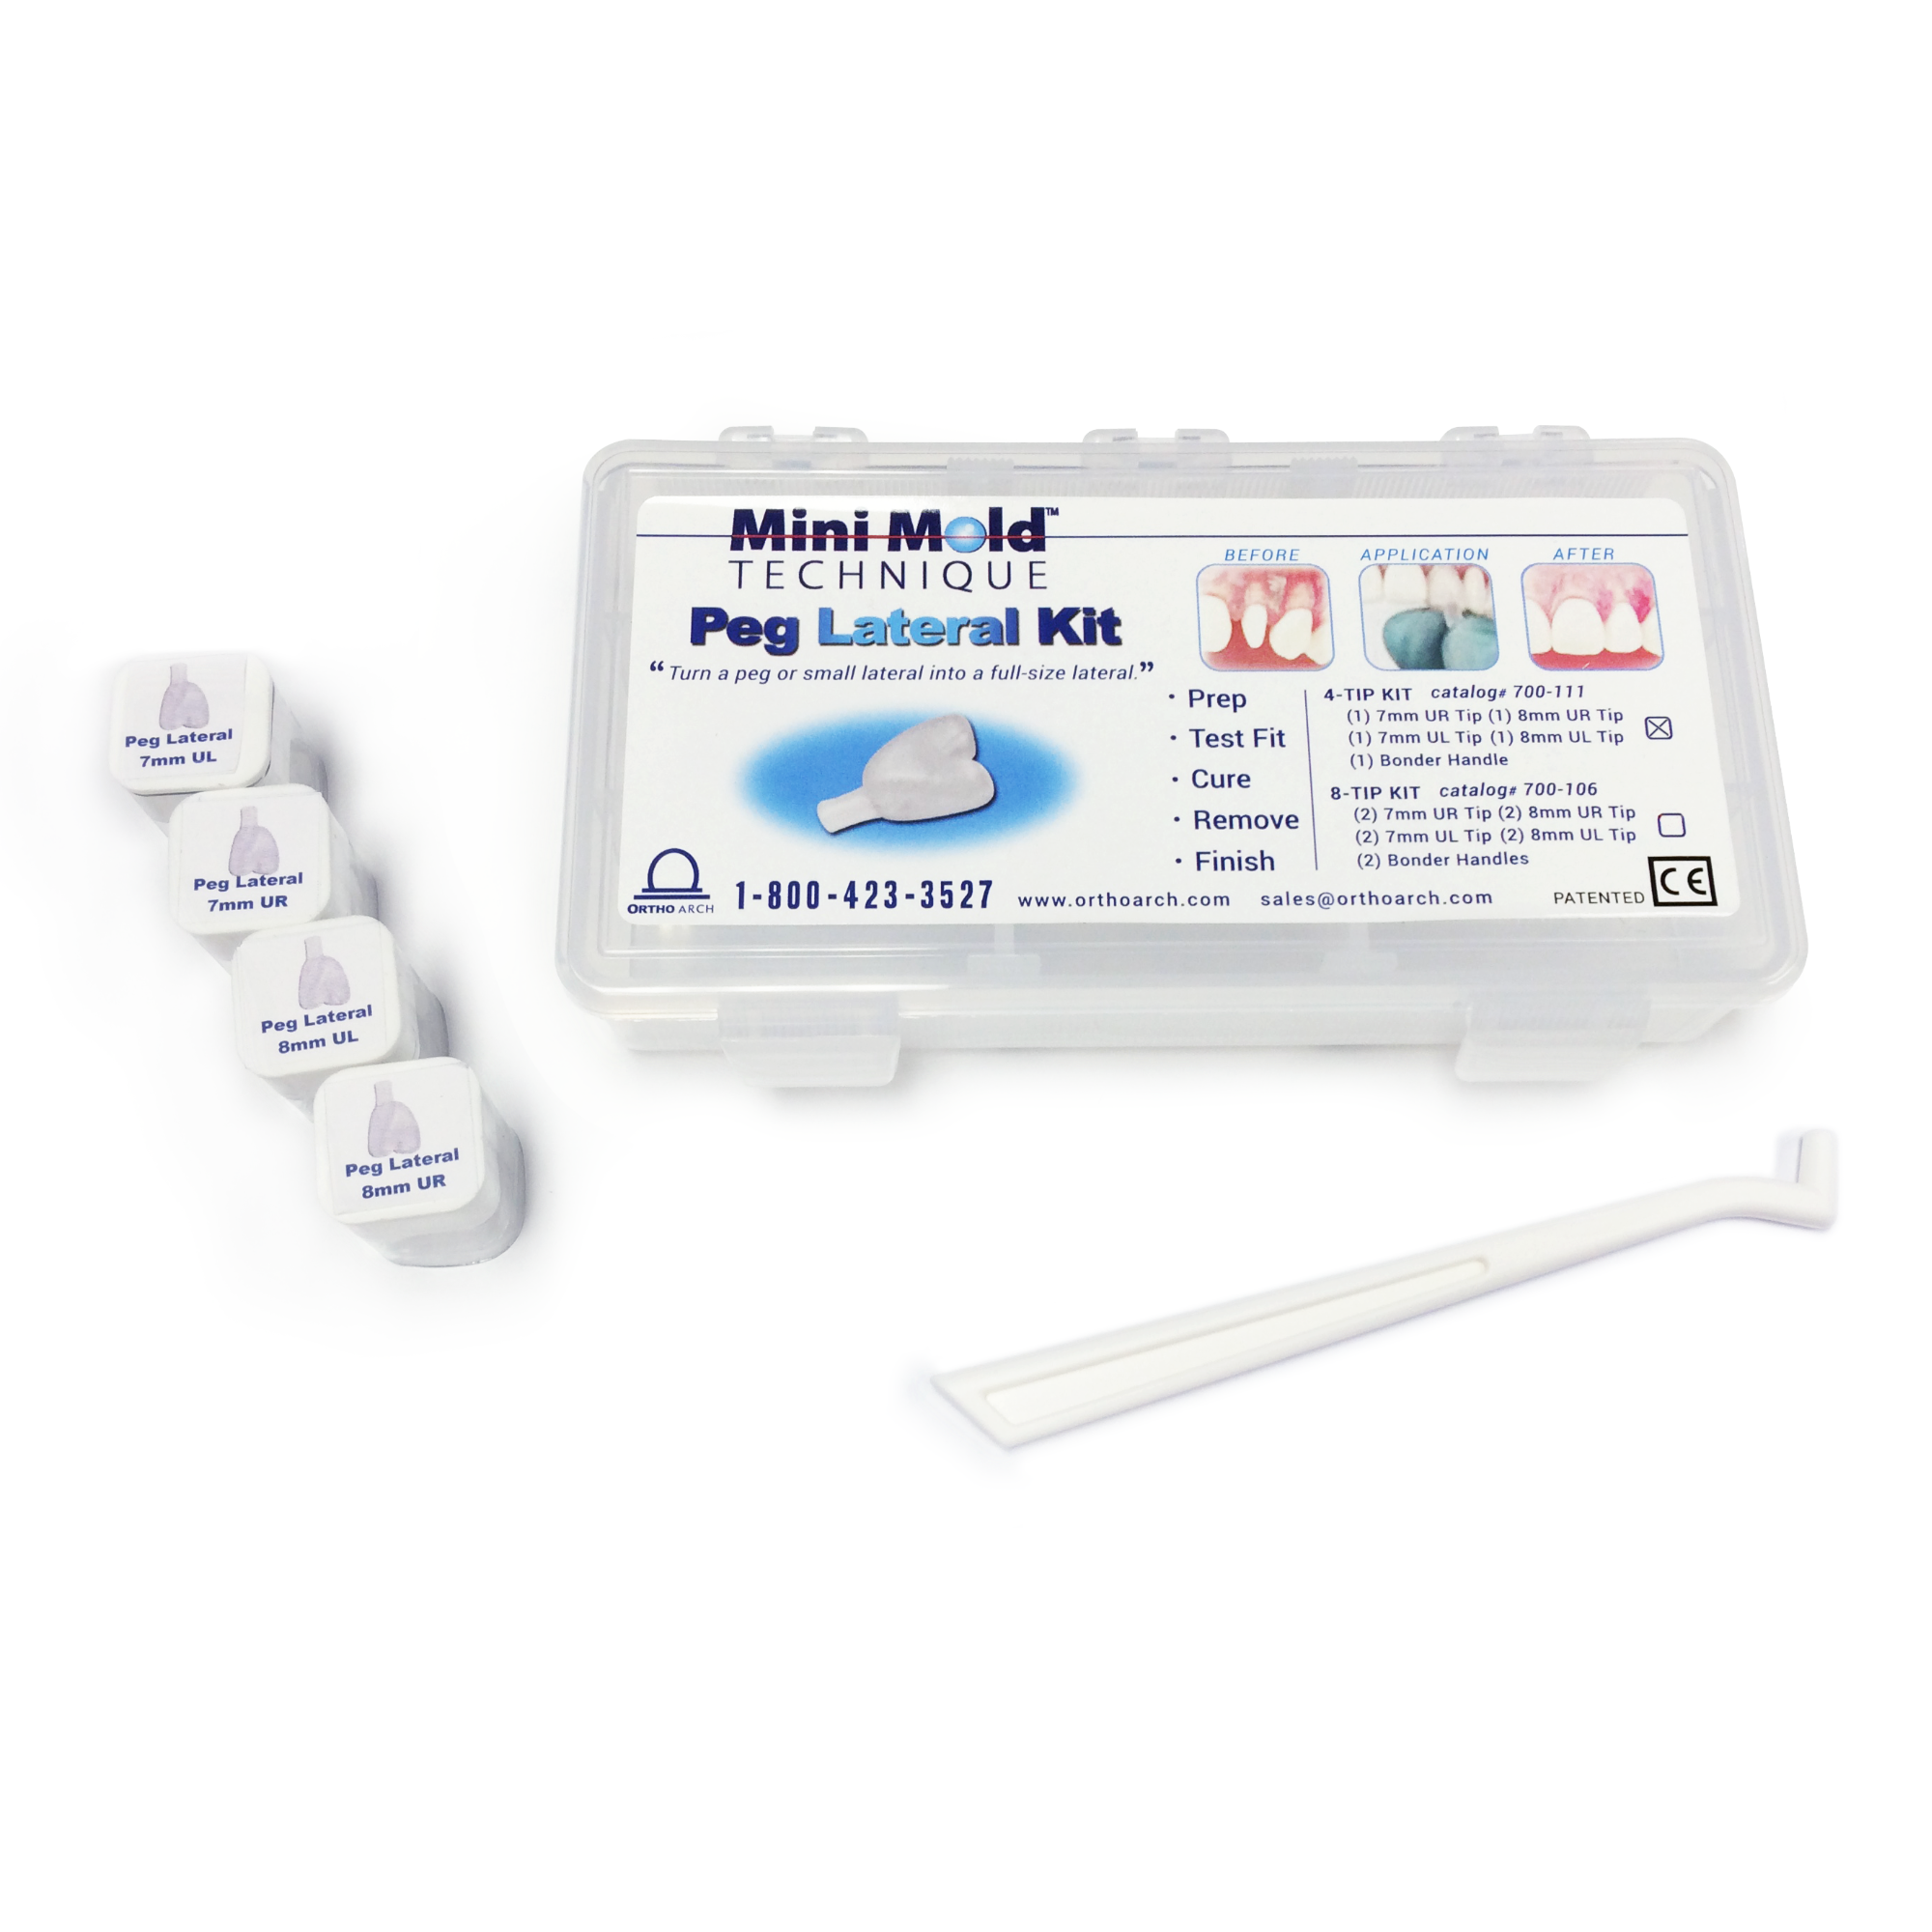 Mini Mold® Peg Lateral Kit - Beck Instruments Store